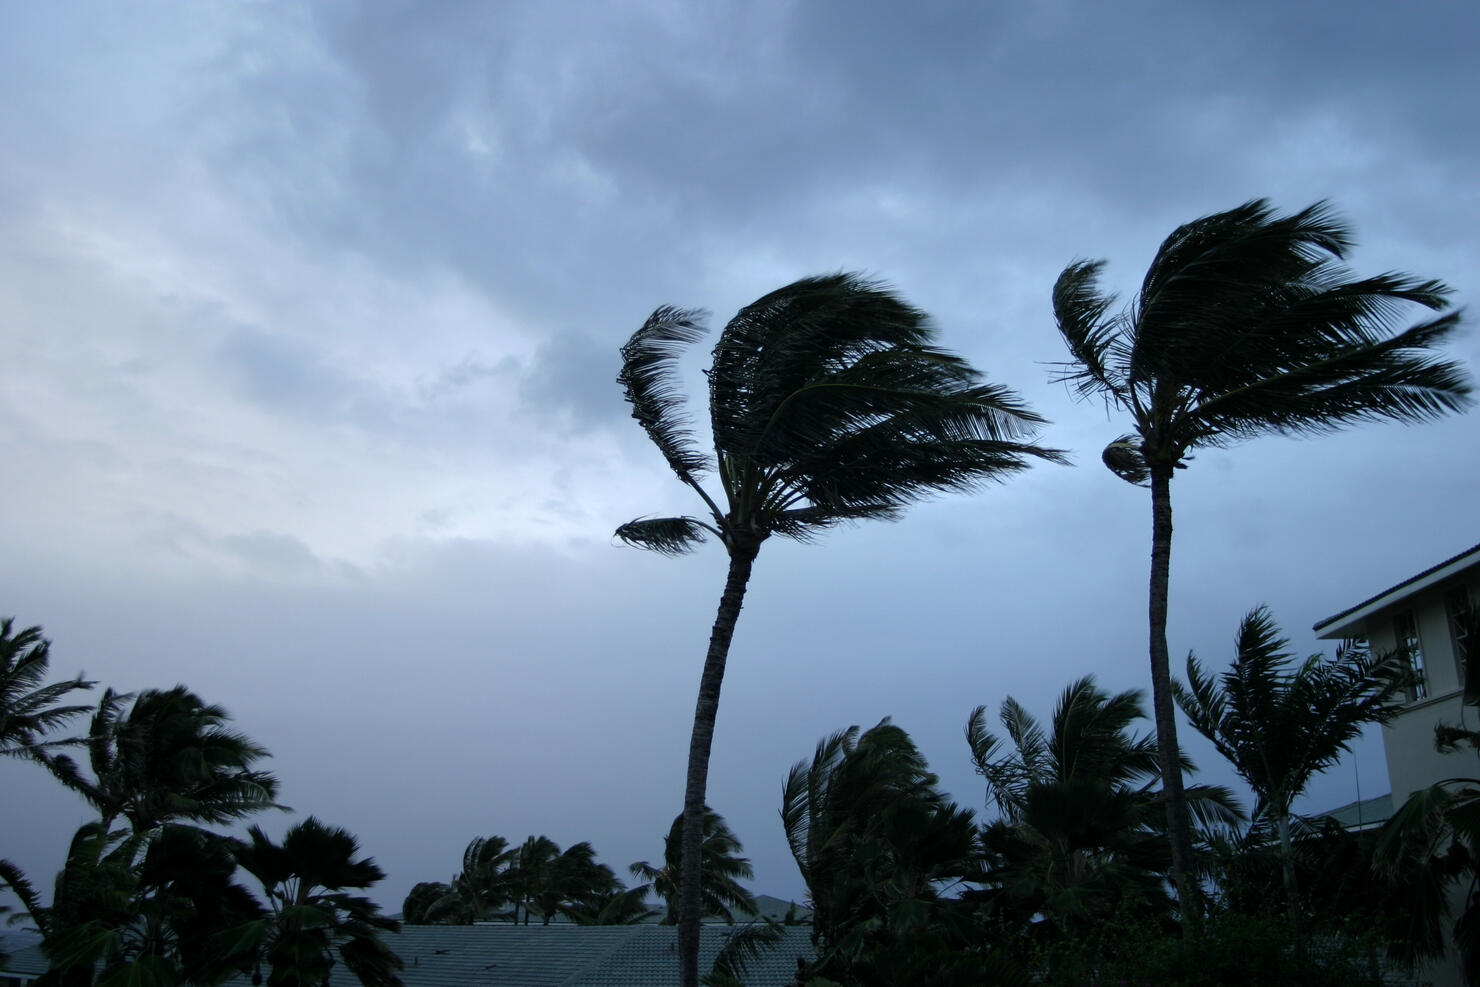 Hurricane or tropical storm wind buffeting palm trees